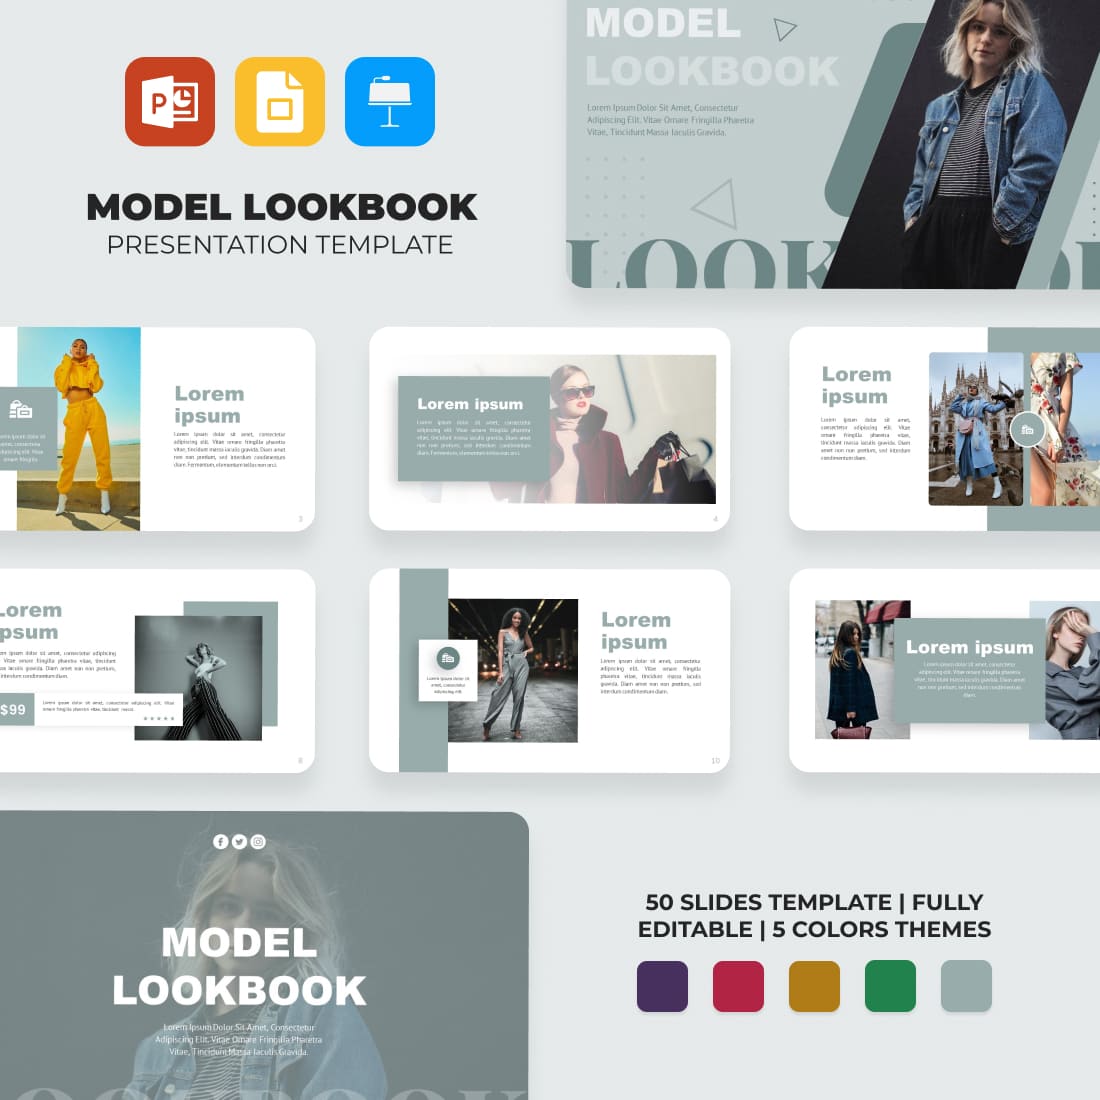 Model Lookbook Presentation Template.